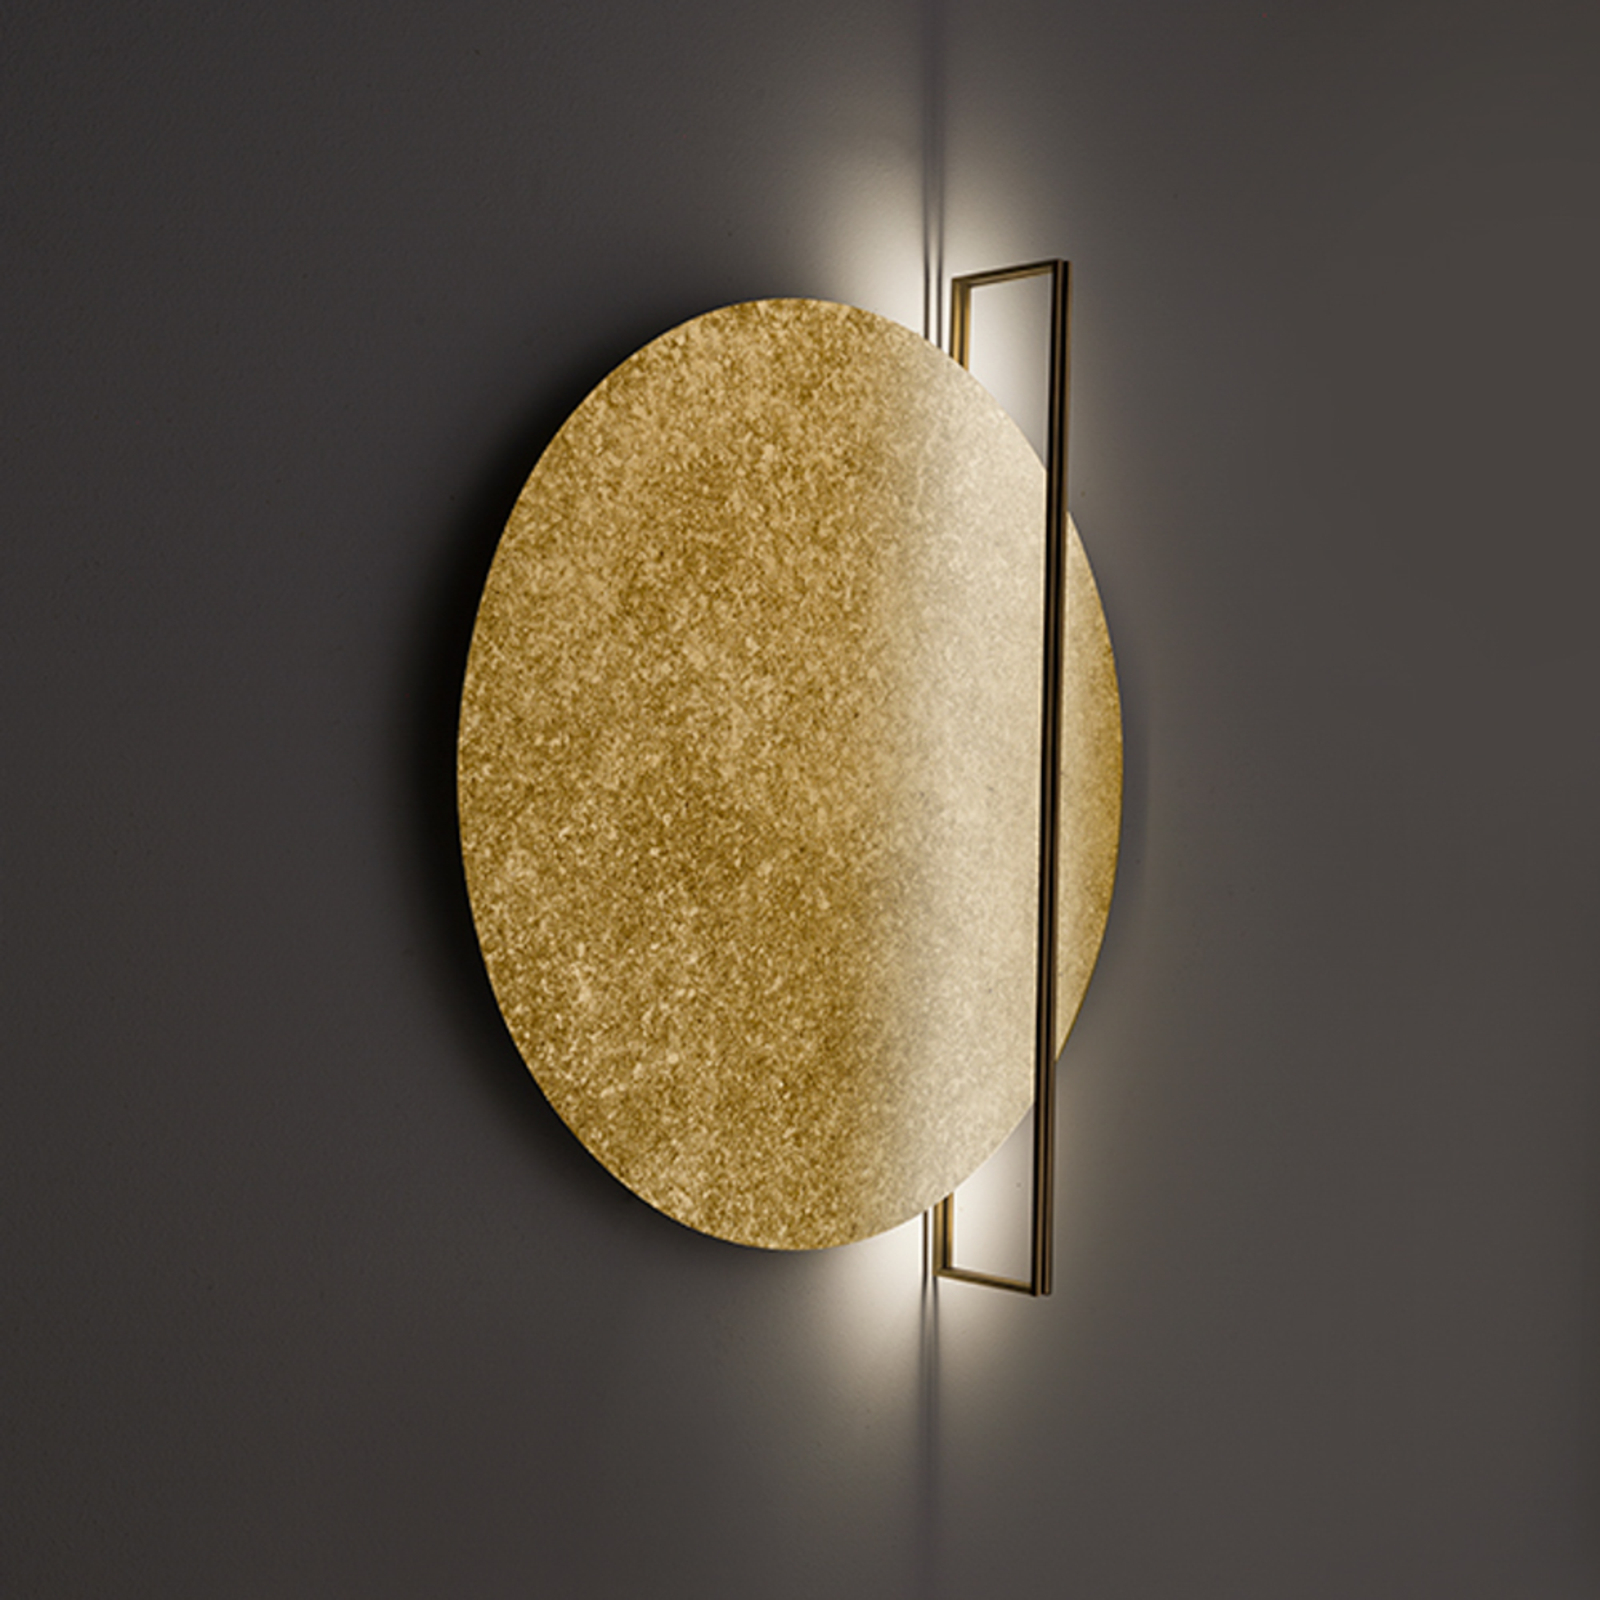 ICONE Essenza ceiling light 927 Ø47cm gold/bronze